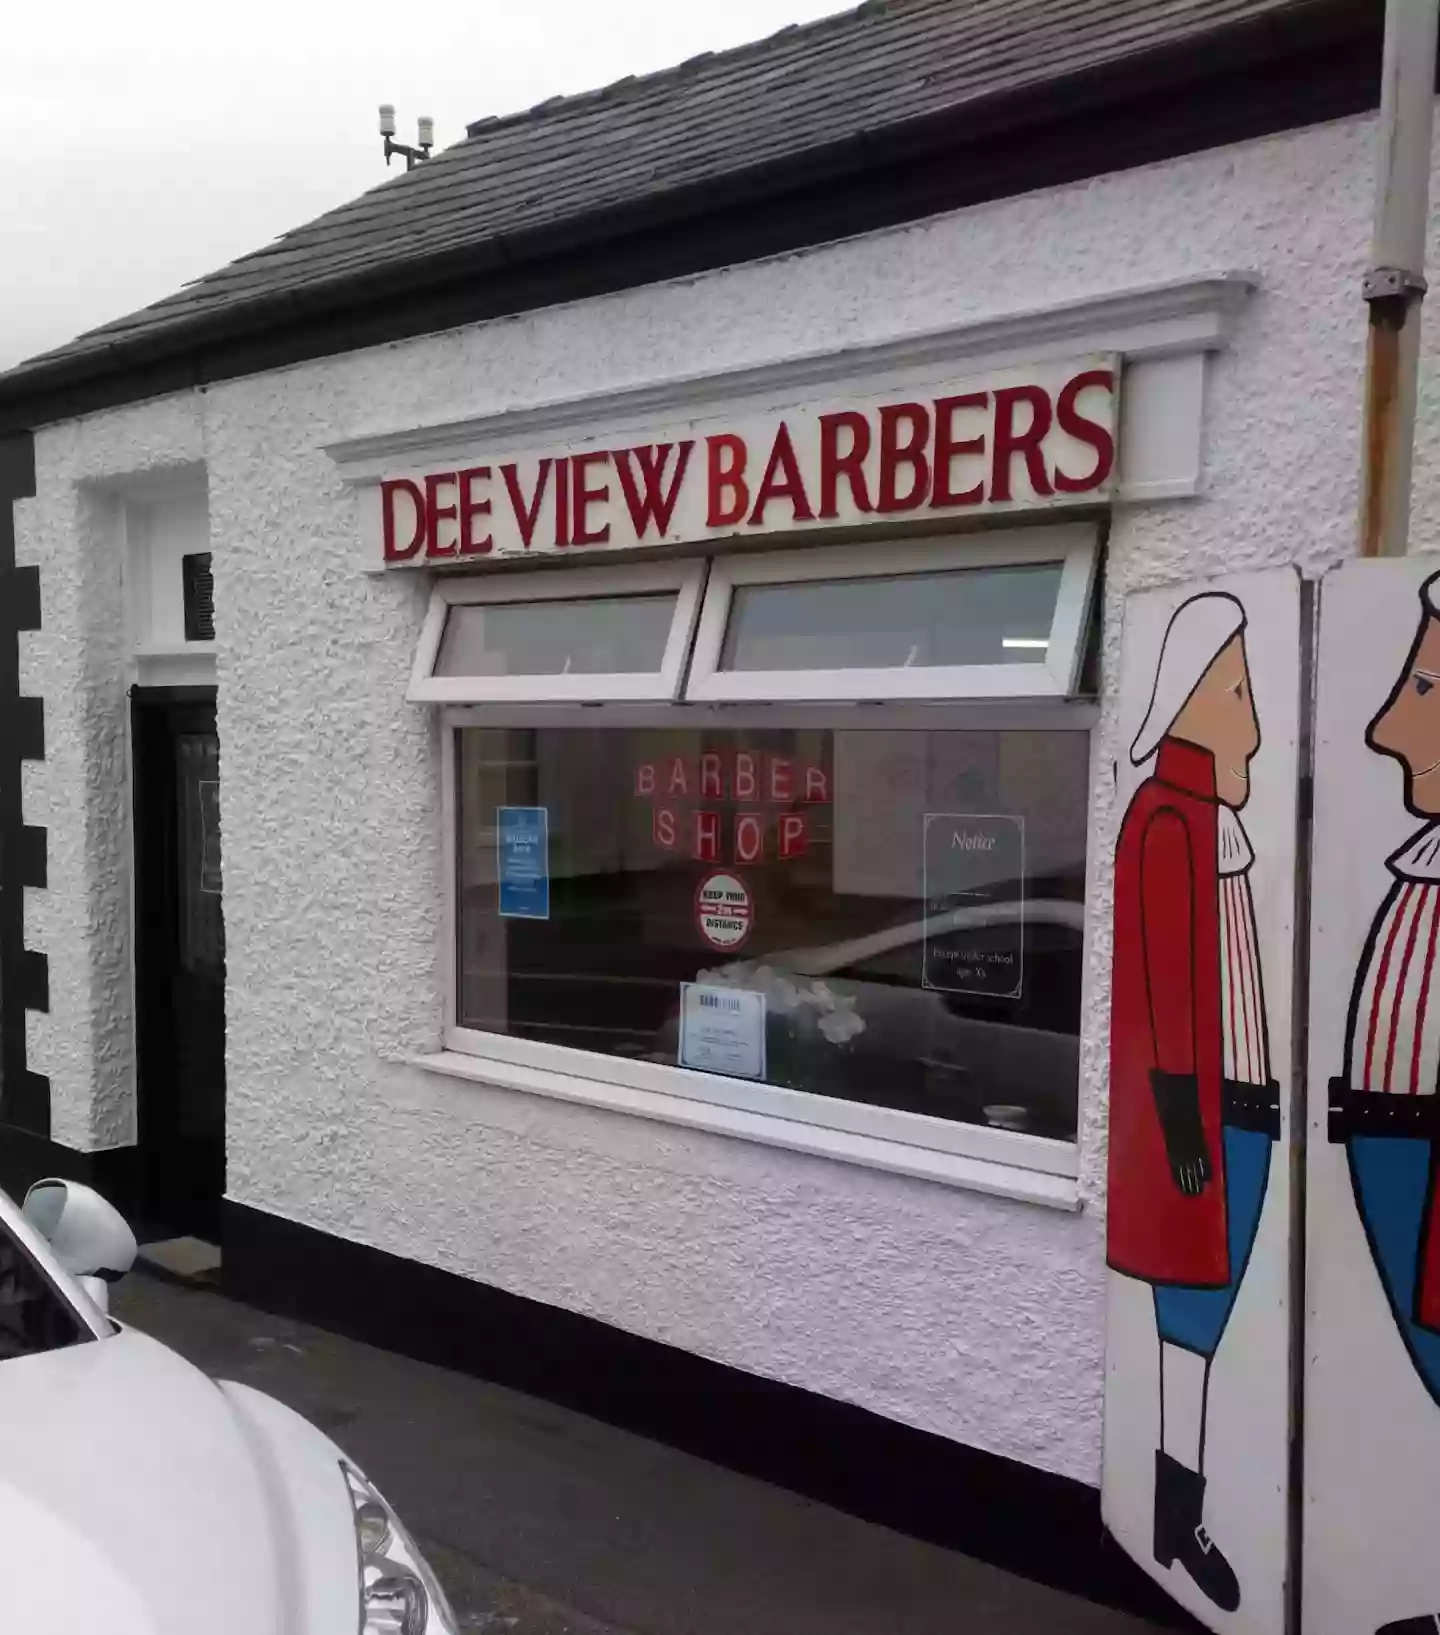 Dee View Barbers